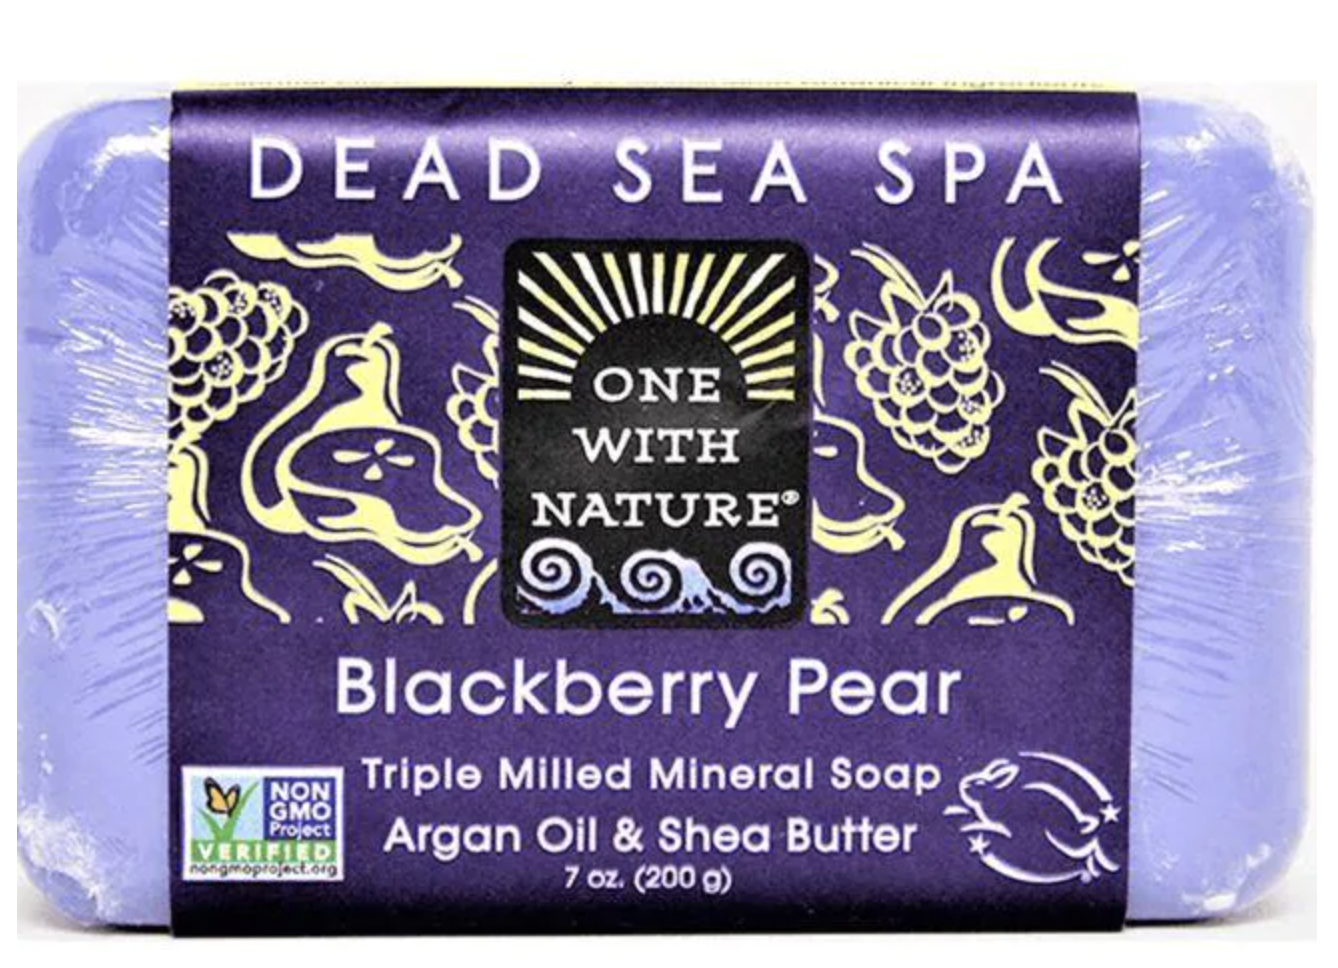 Dead Sea Spa Blackberry Pear Soap